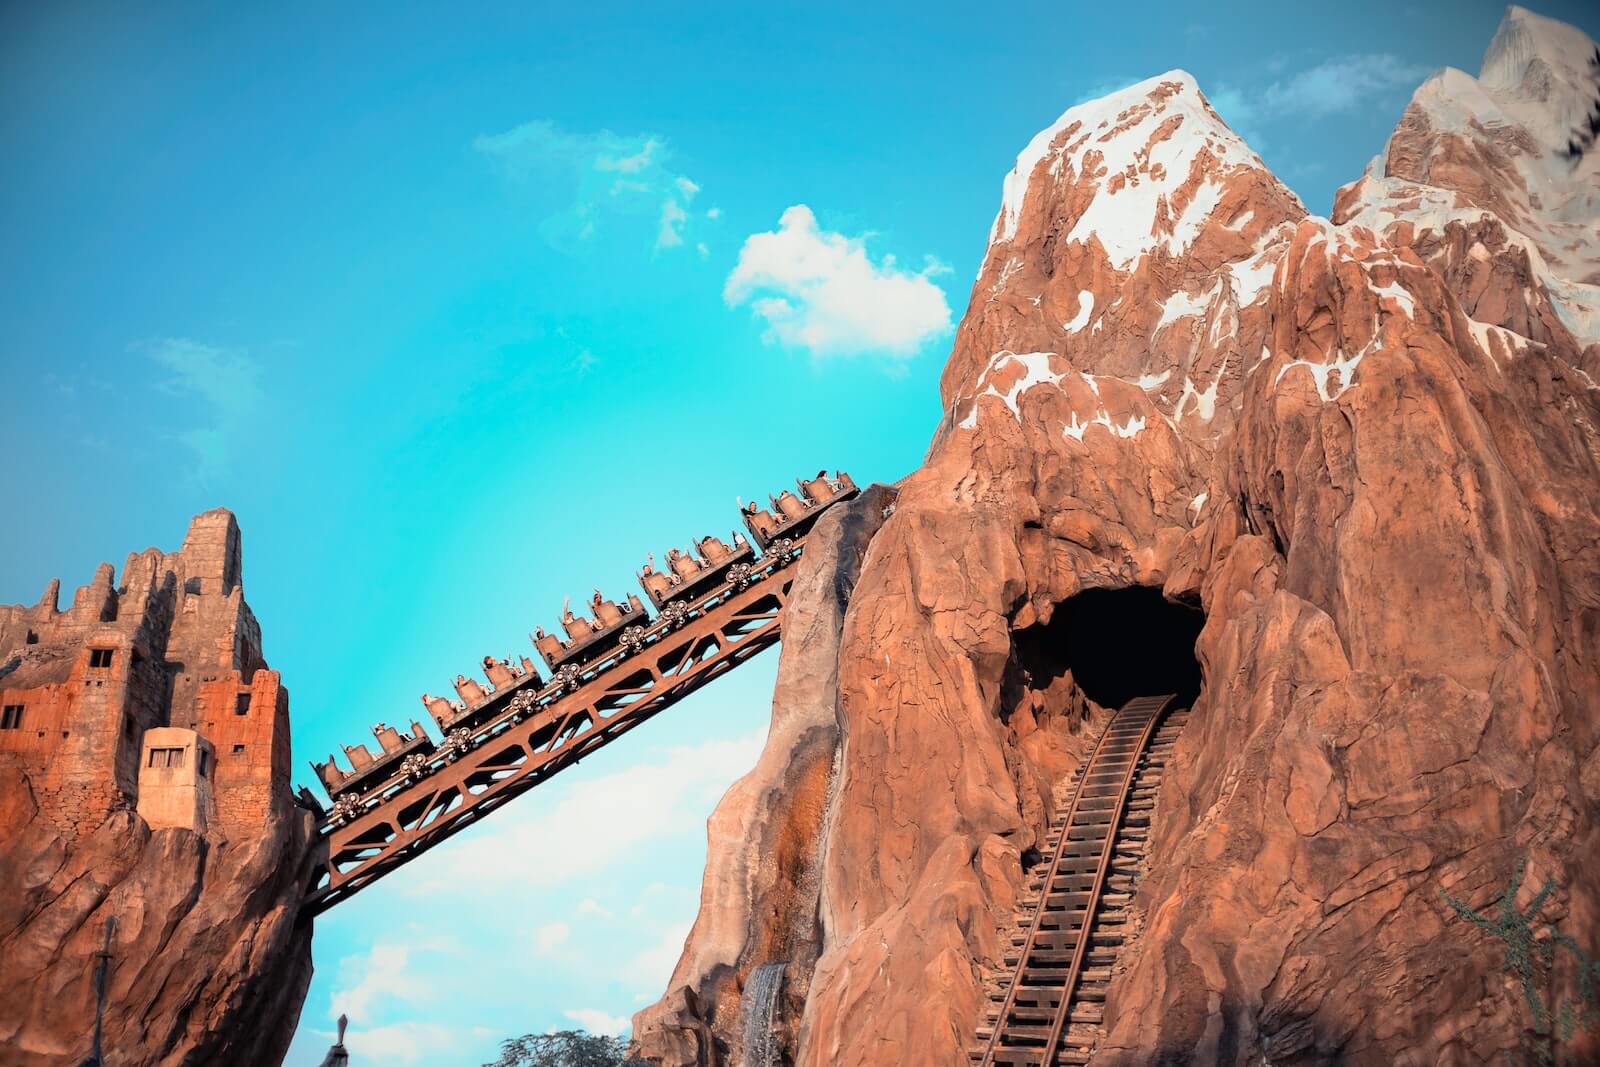 Expedition Everest roller coaster at Disney World